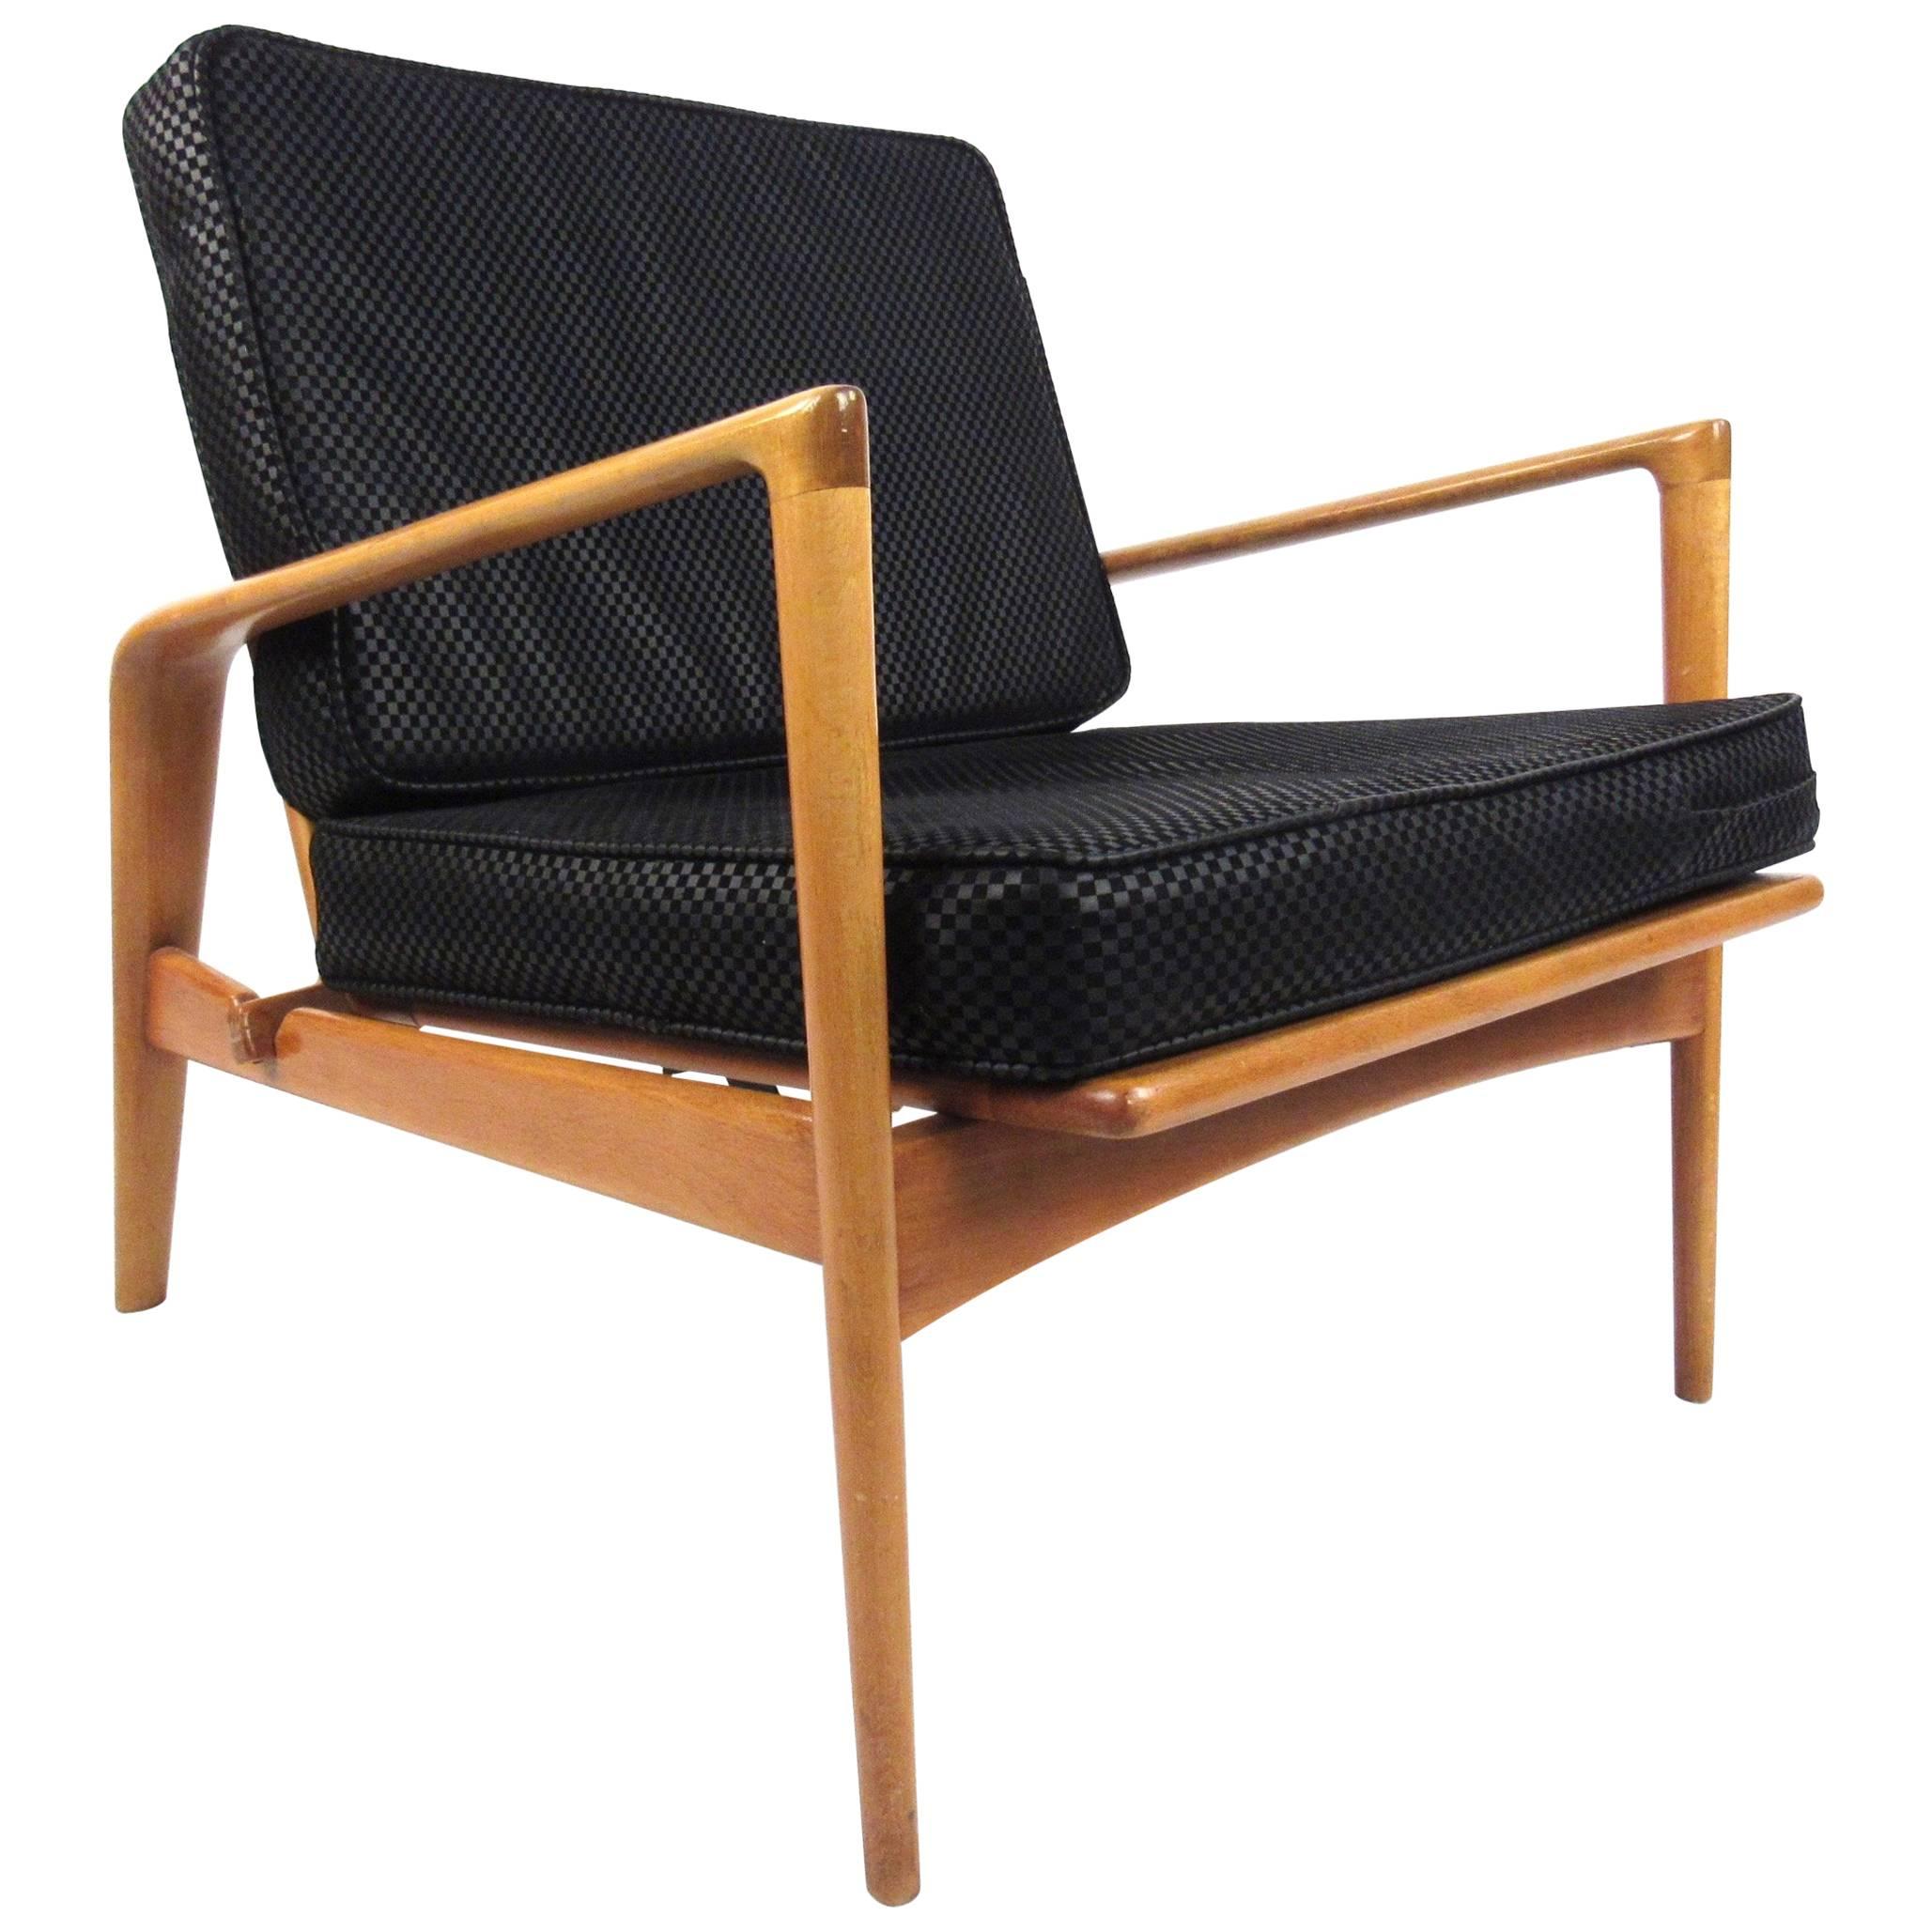 Vintage Scandinavian Modern Lounge Chair in the Style of Kofod-Larsen